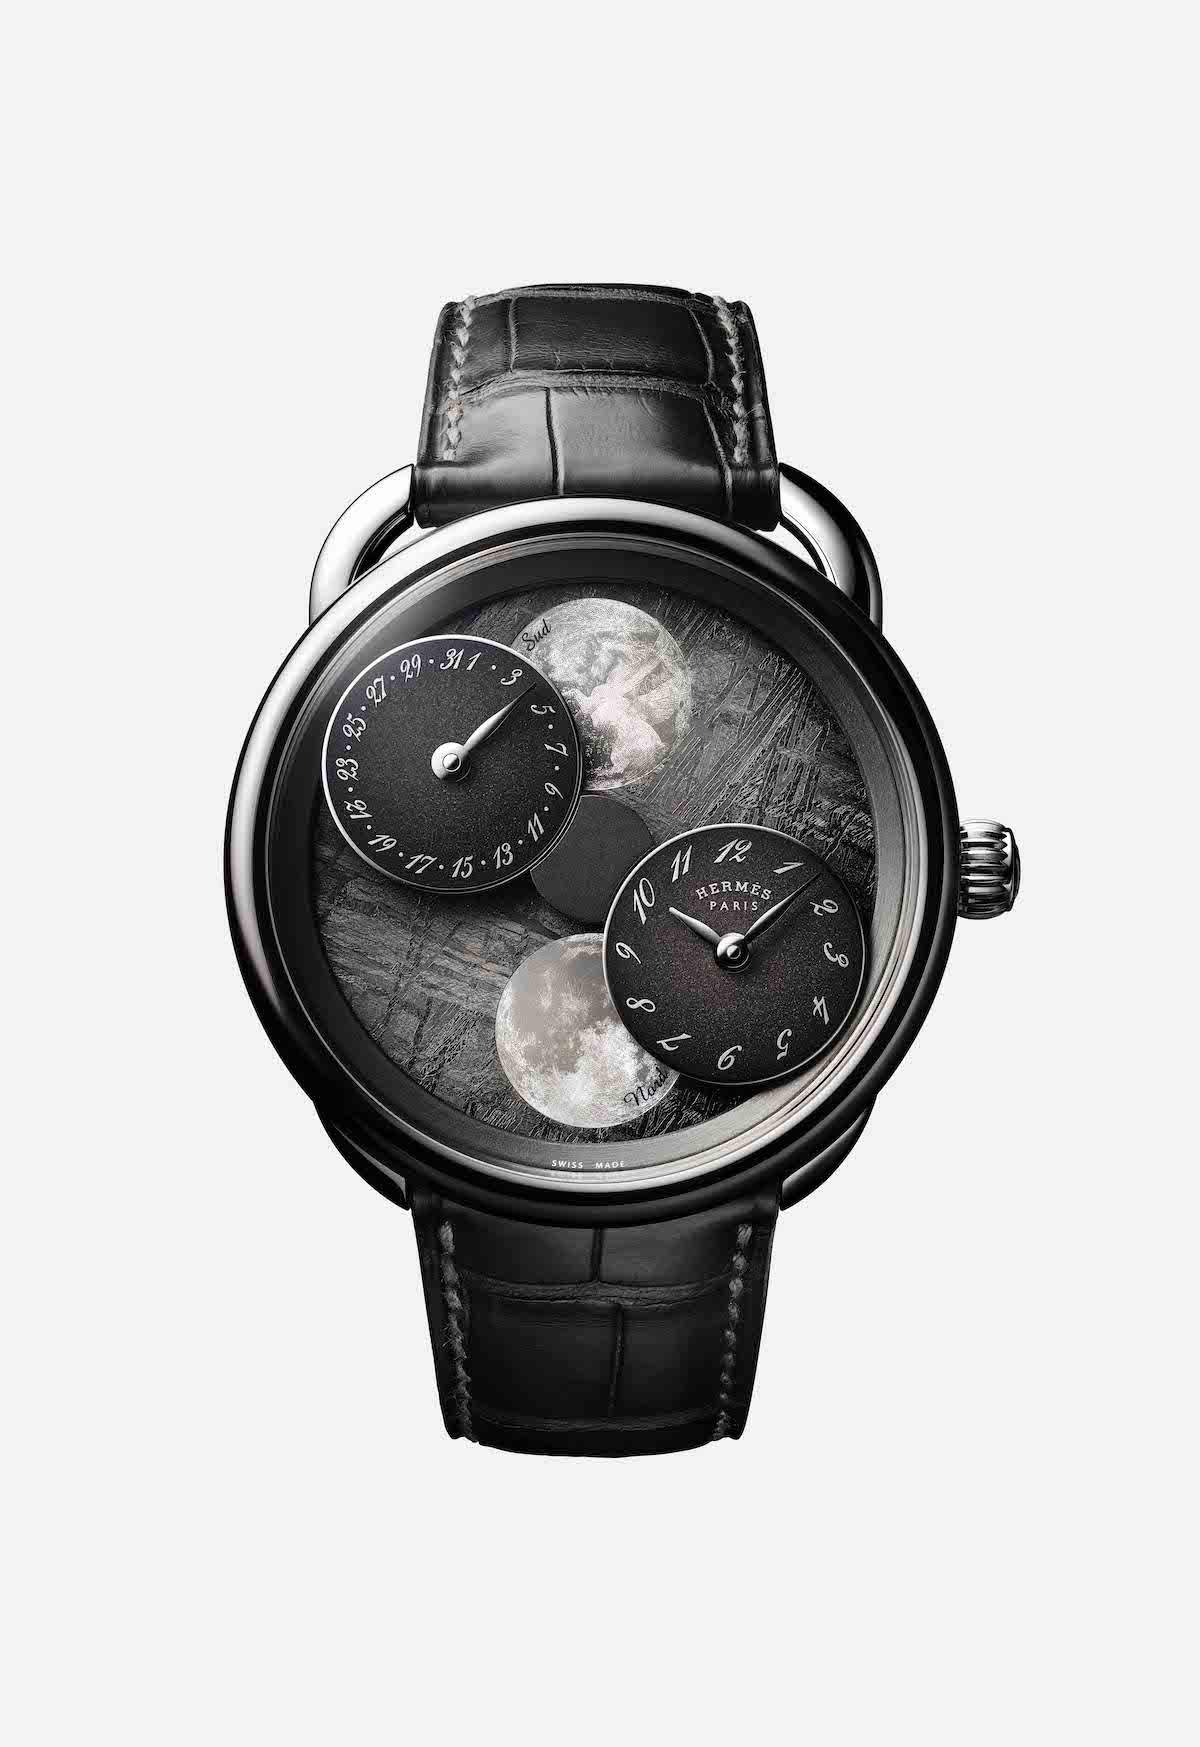 SIHH 2019? Hermes Arceau L'Heure De La Lune watch with meteorite dial.